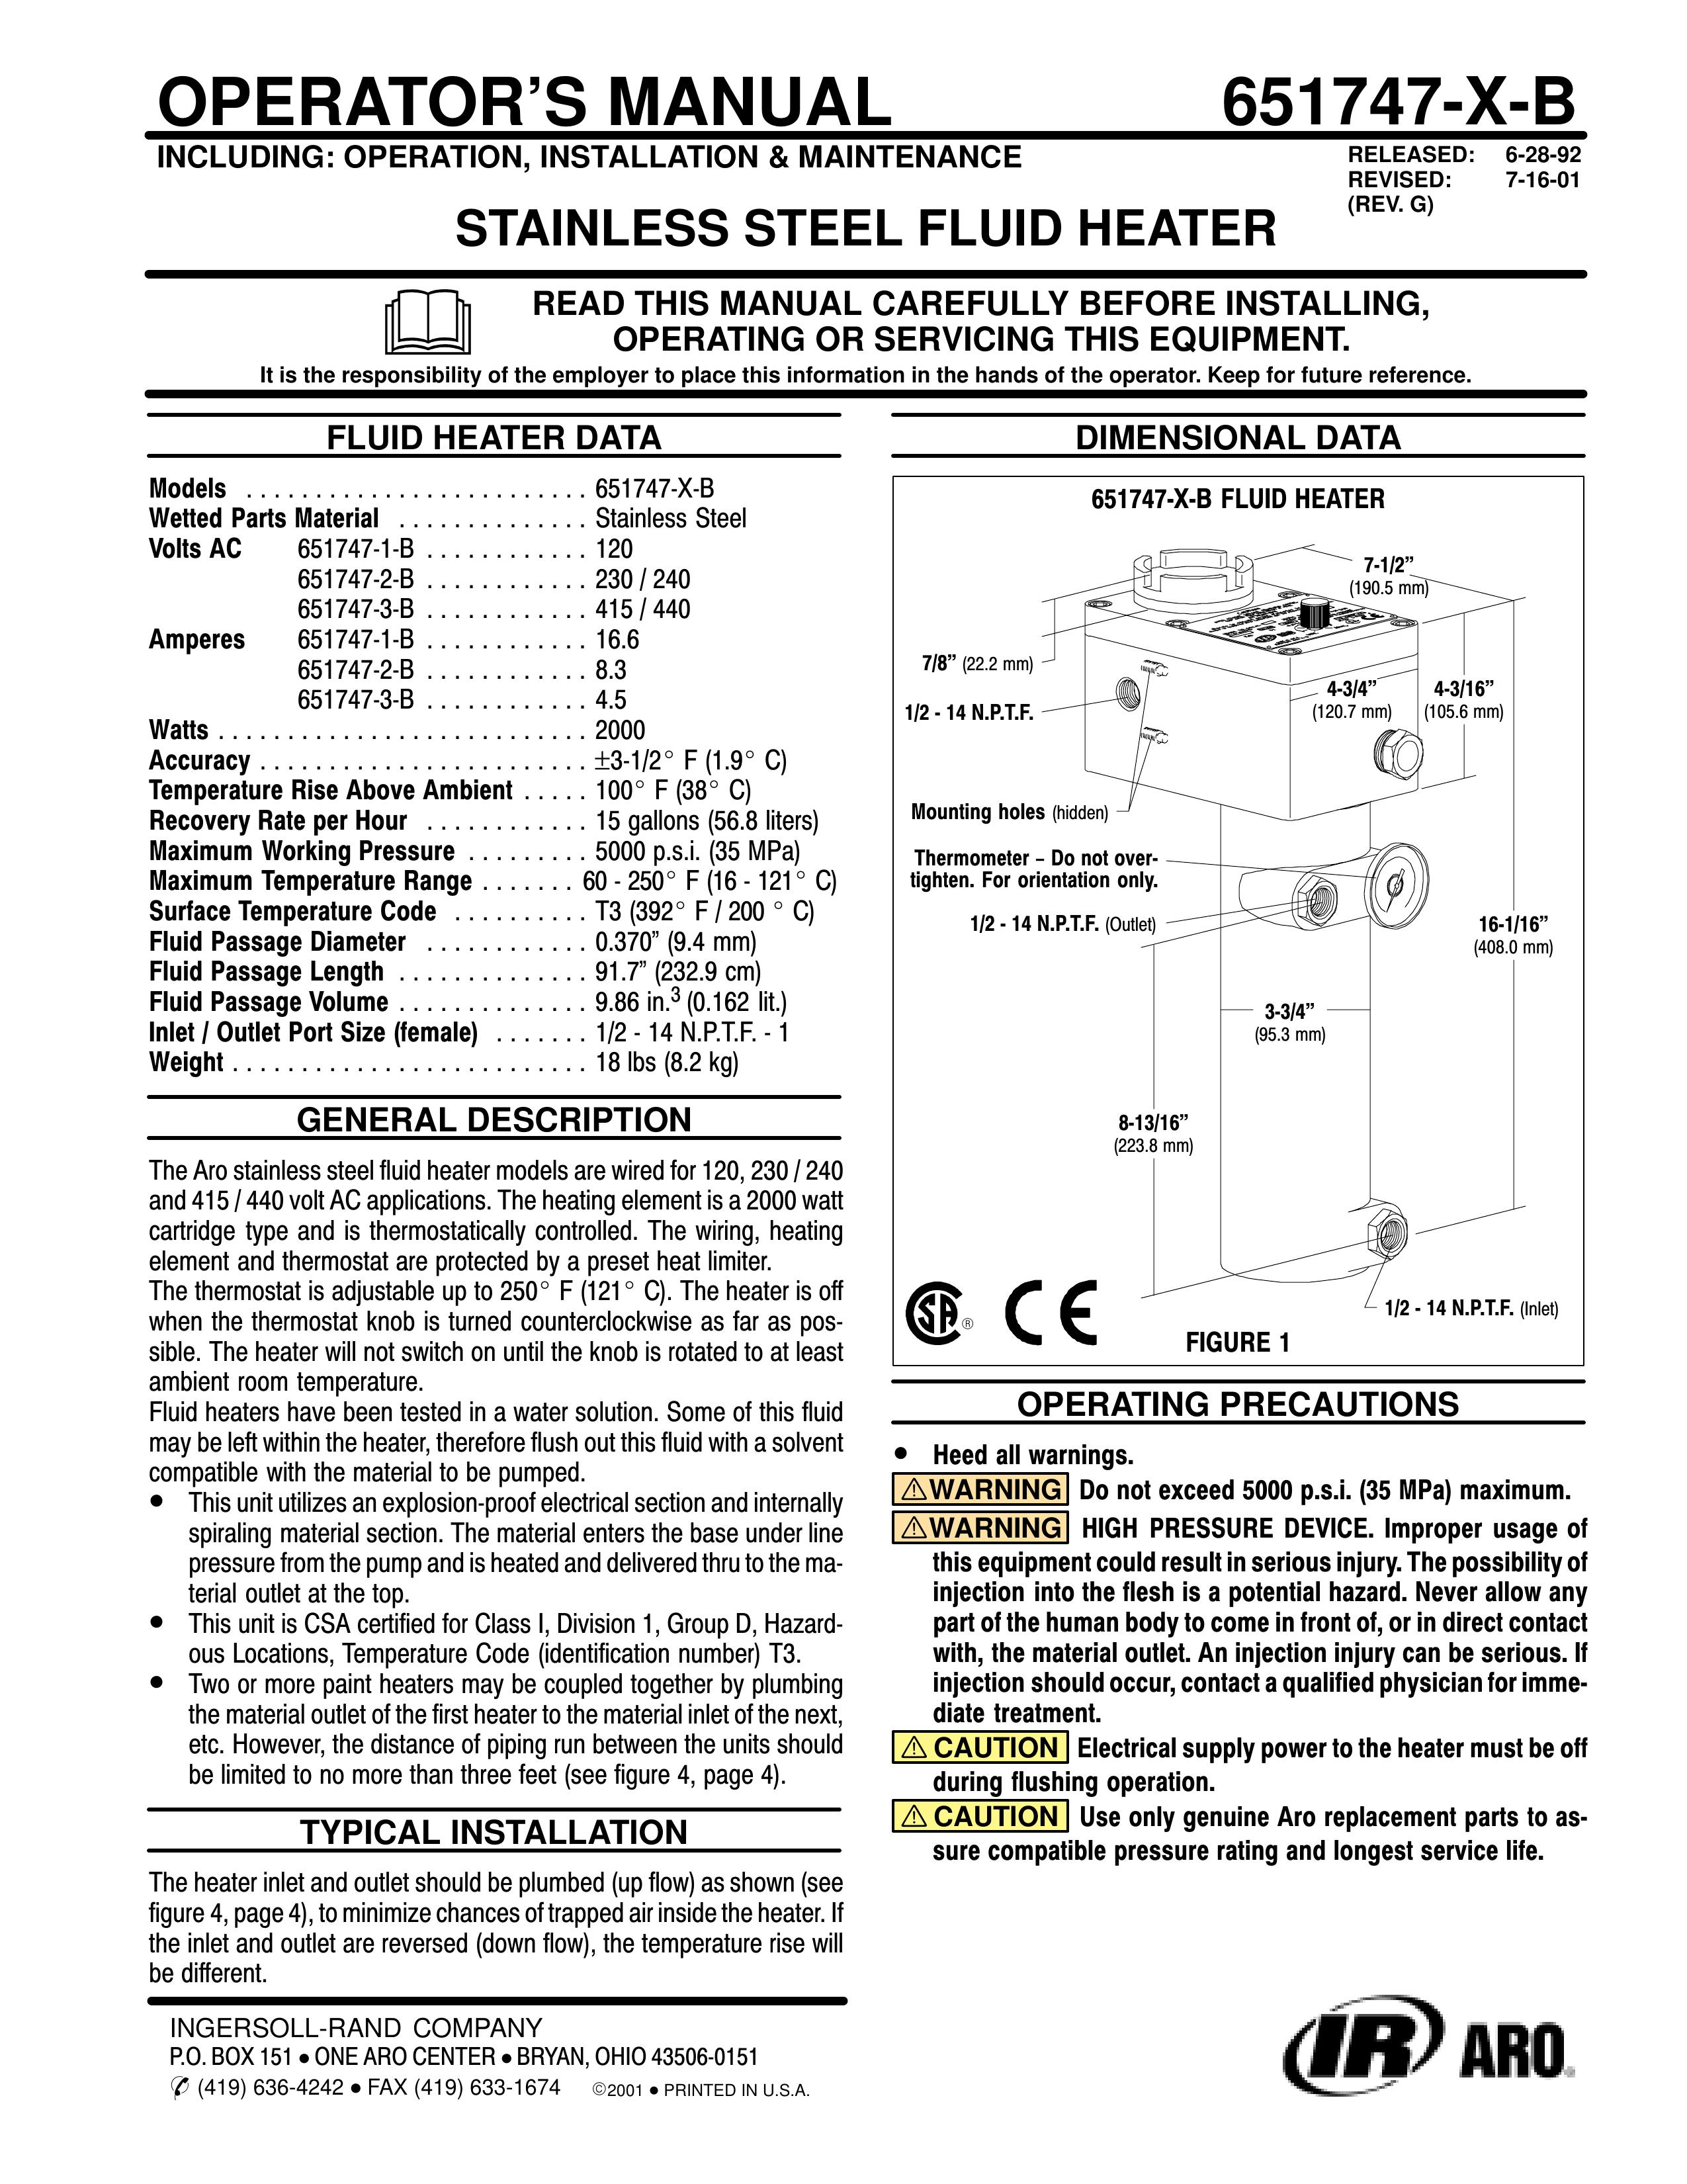 Ingersoll-Rand 651747-X-B Patio Heater User Manual